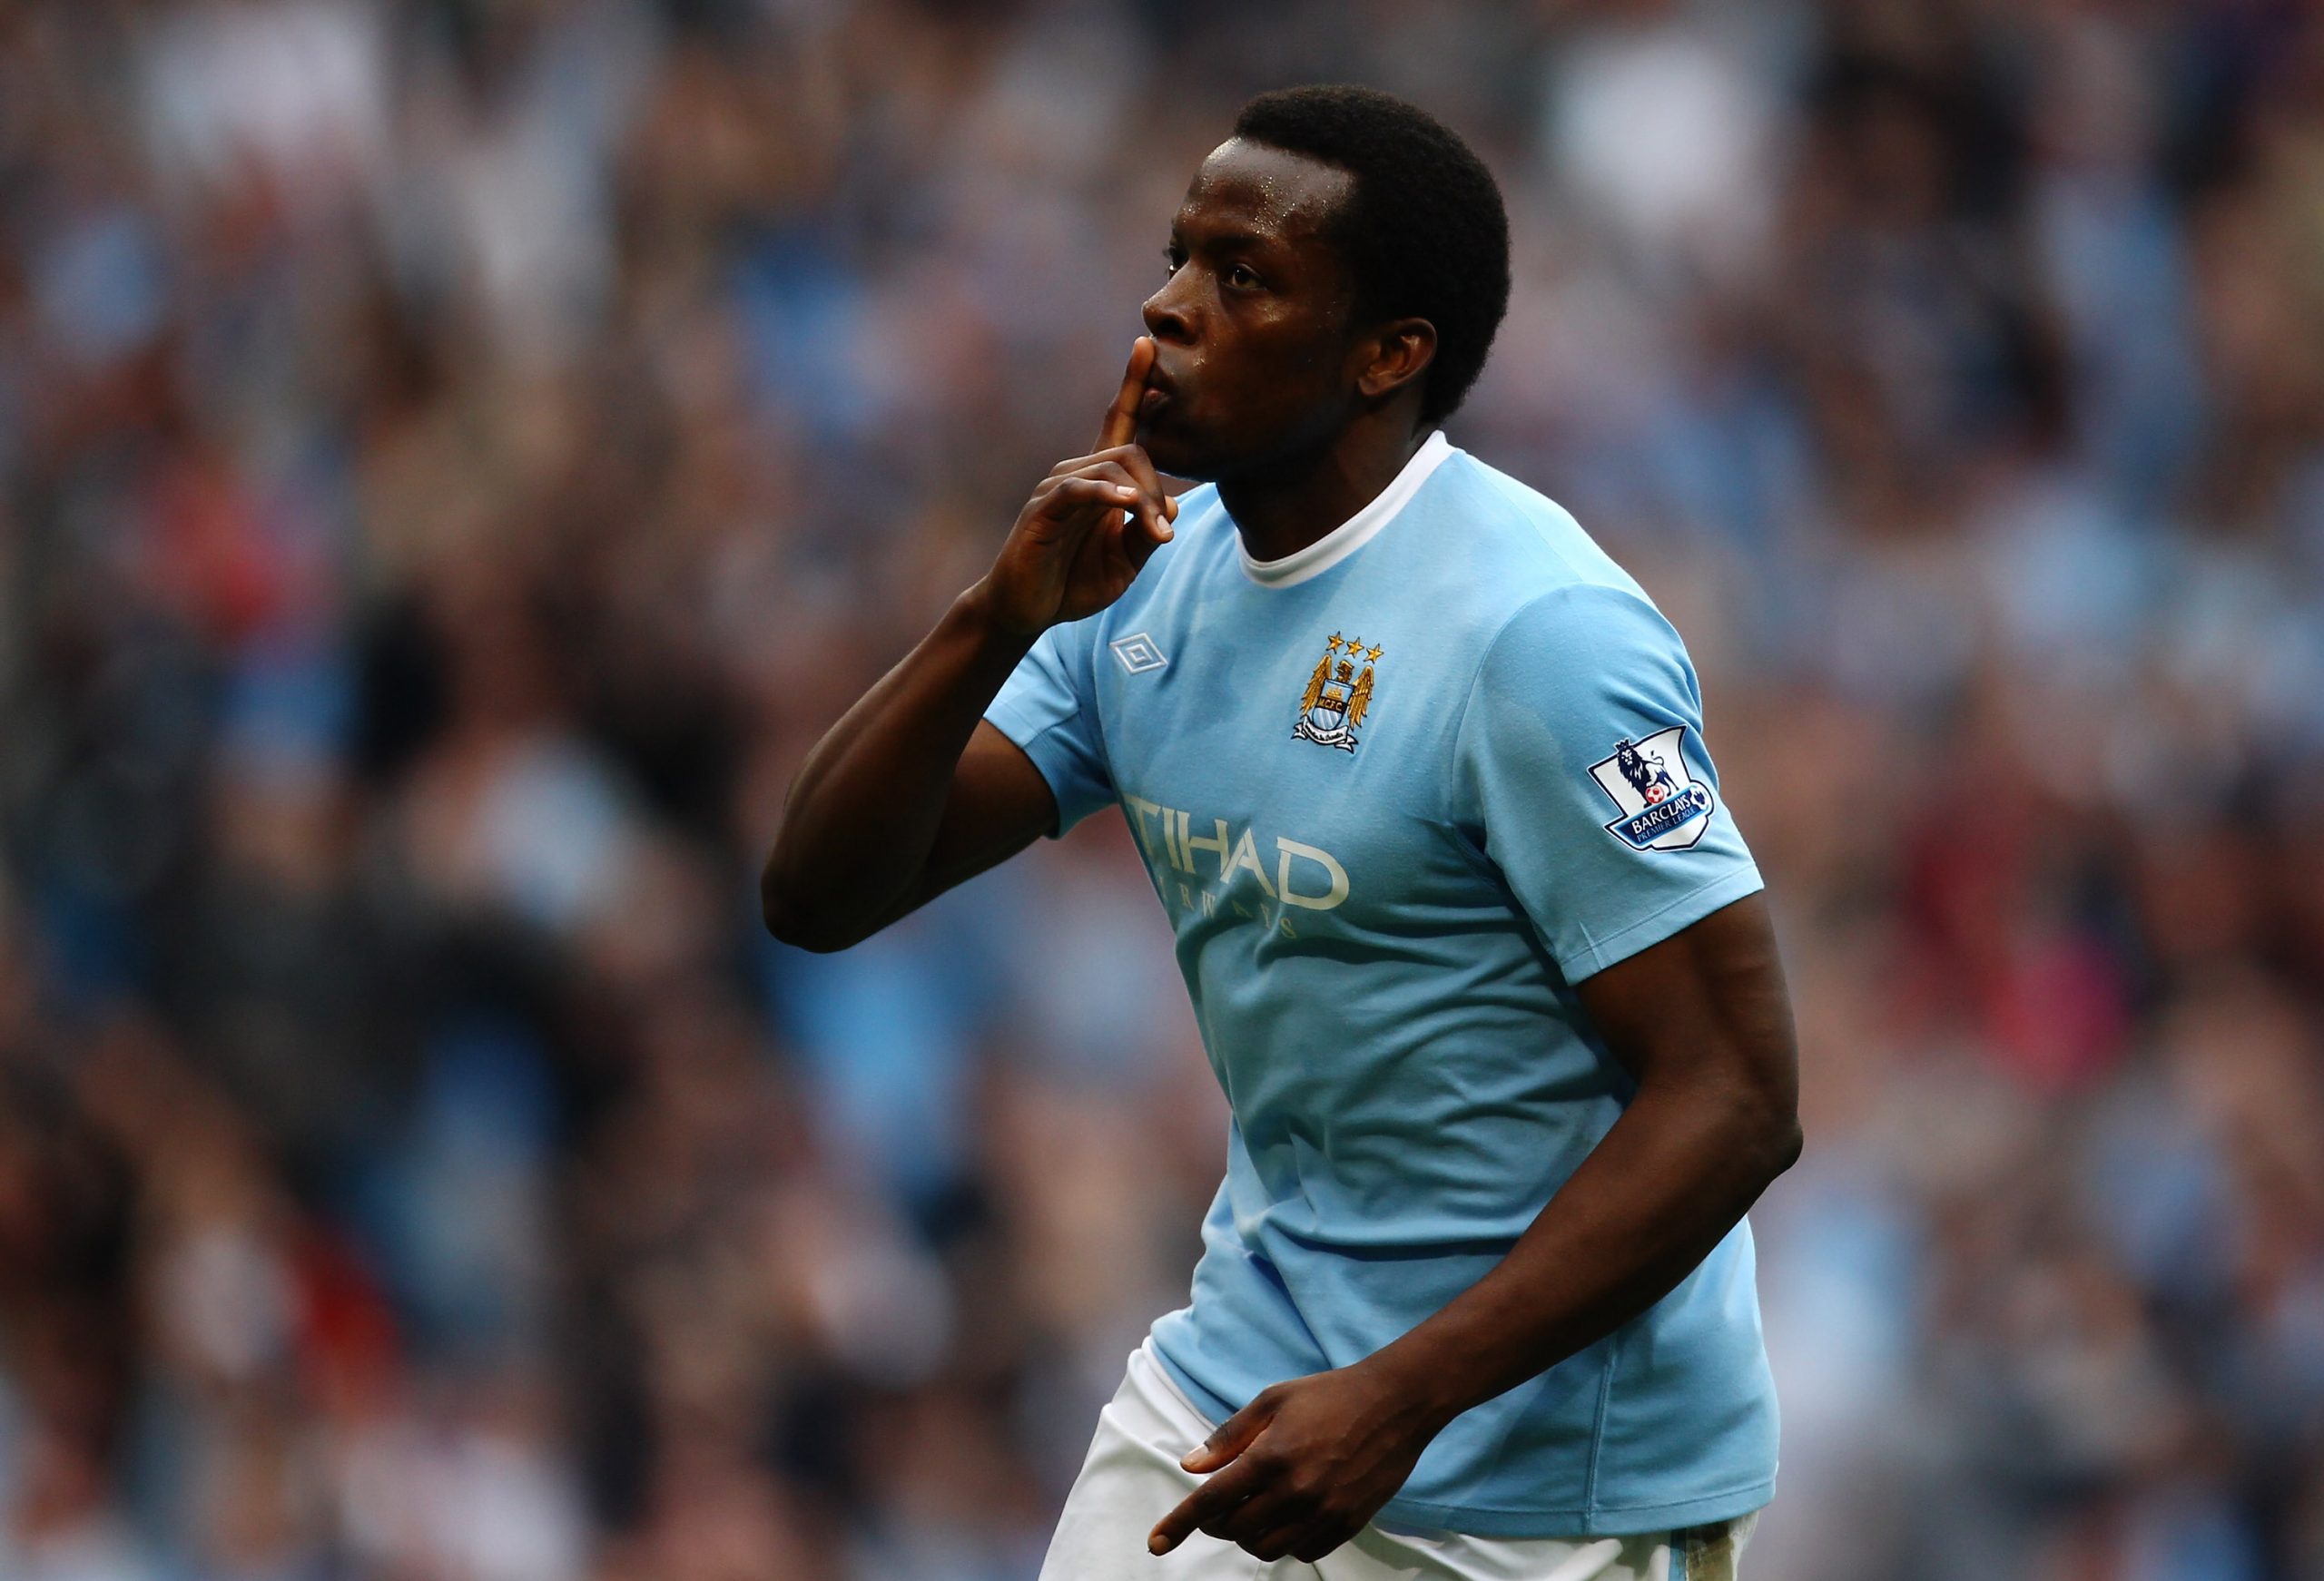 Nedum Onuoha of Manchester City celebrates scoring a goal against Birmingham City.